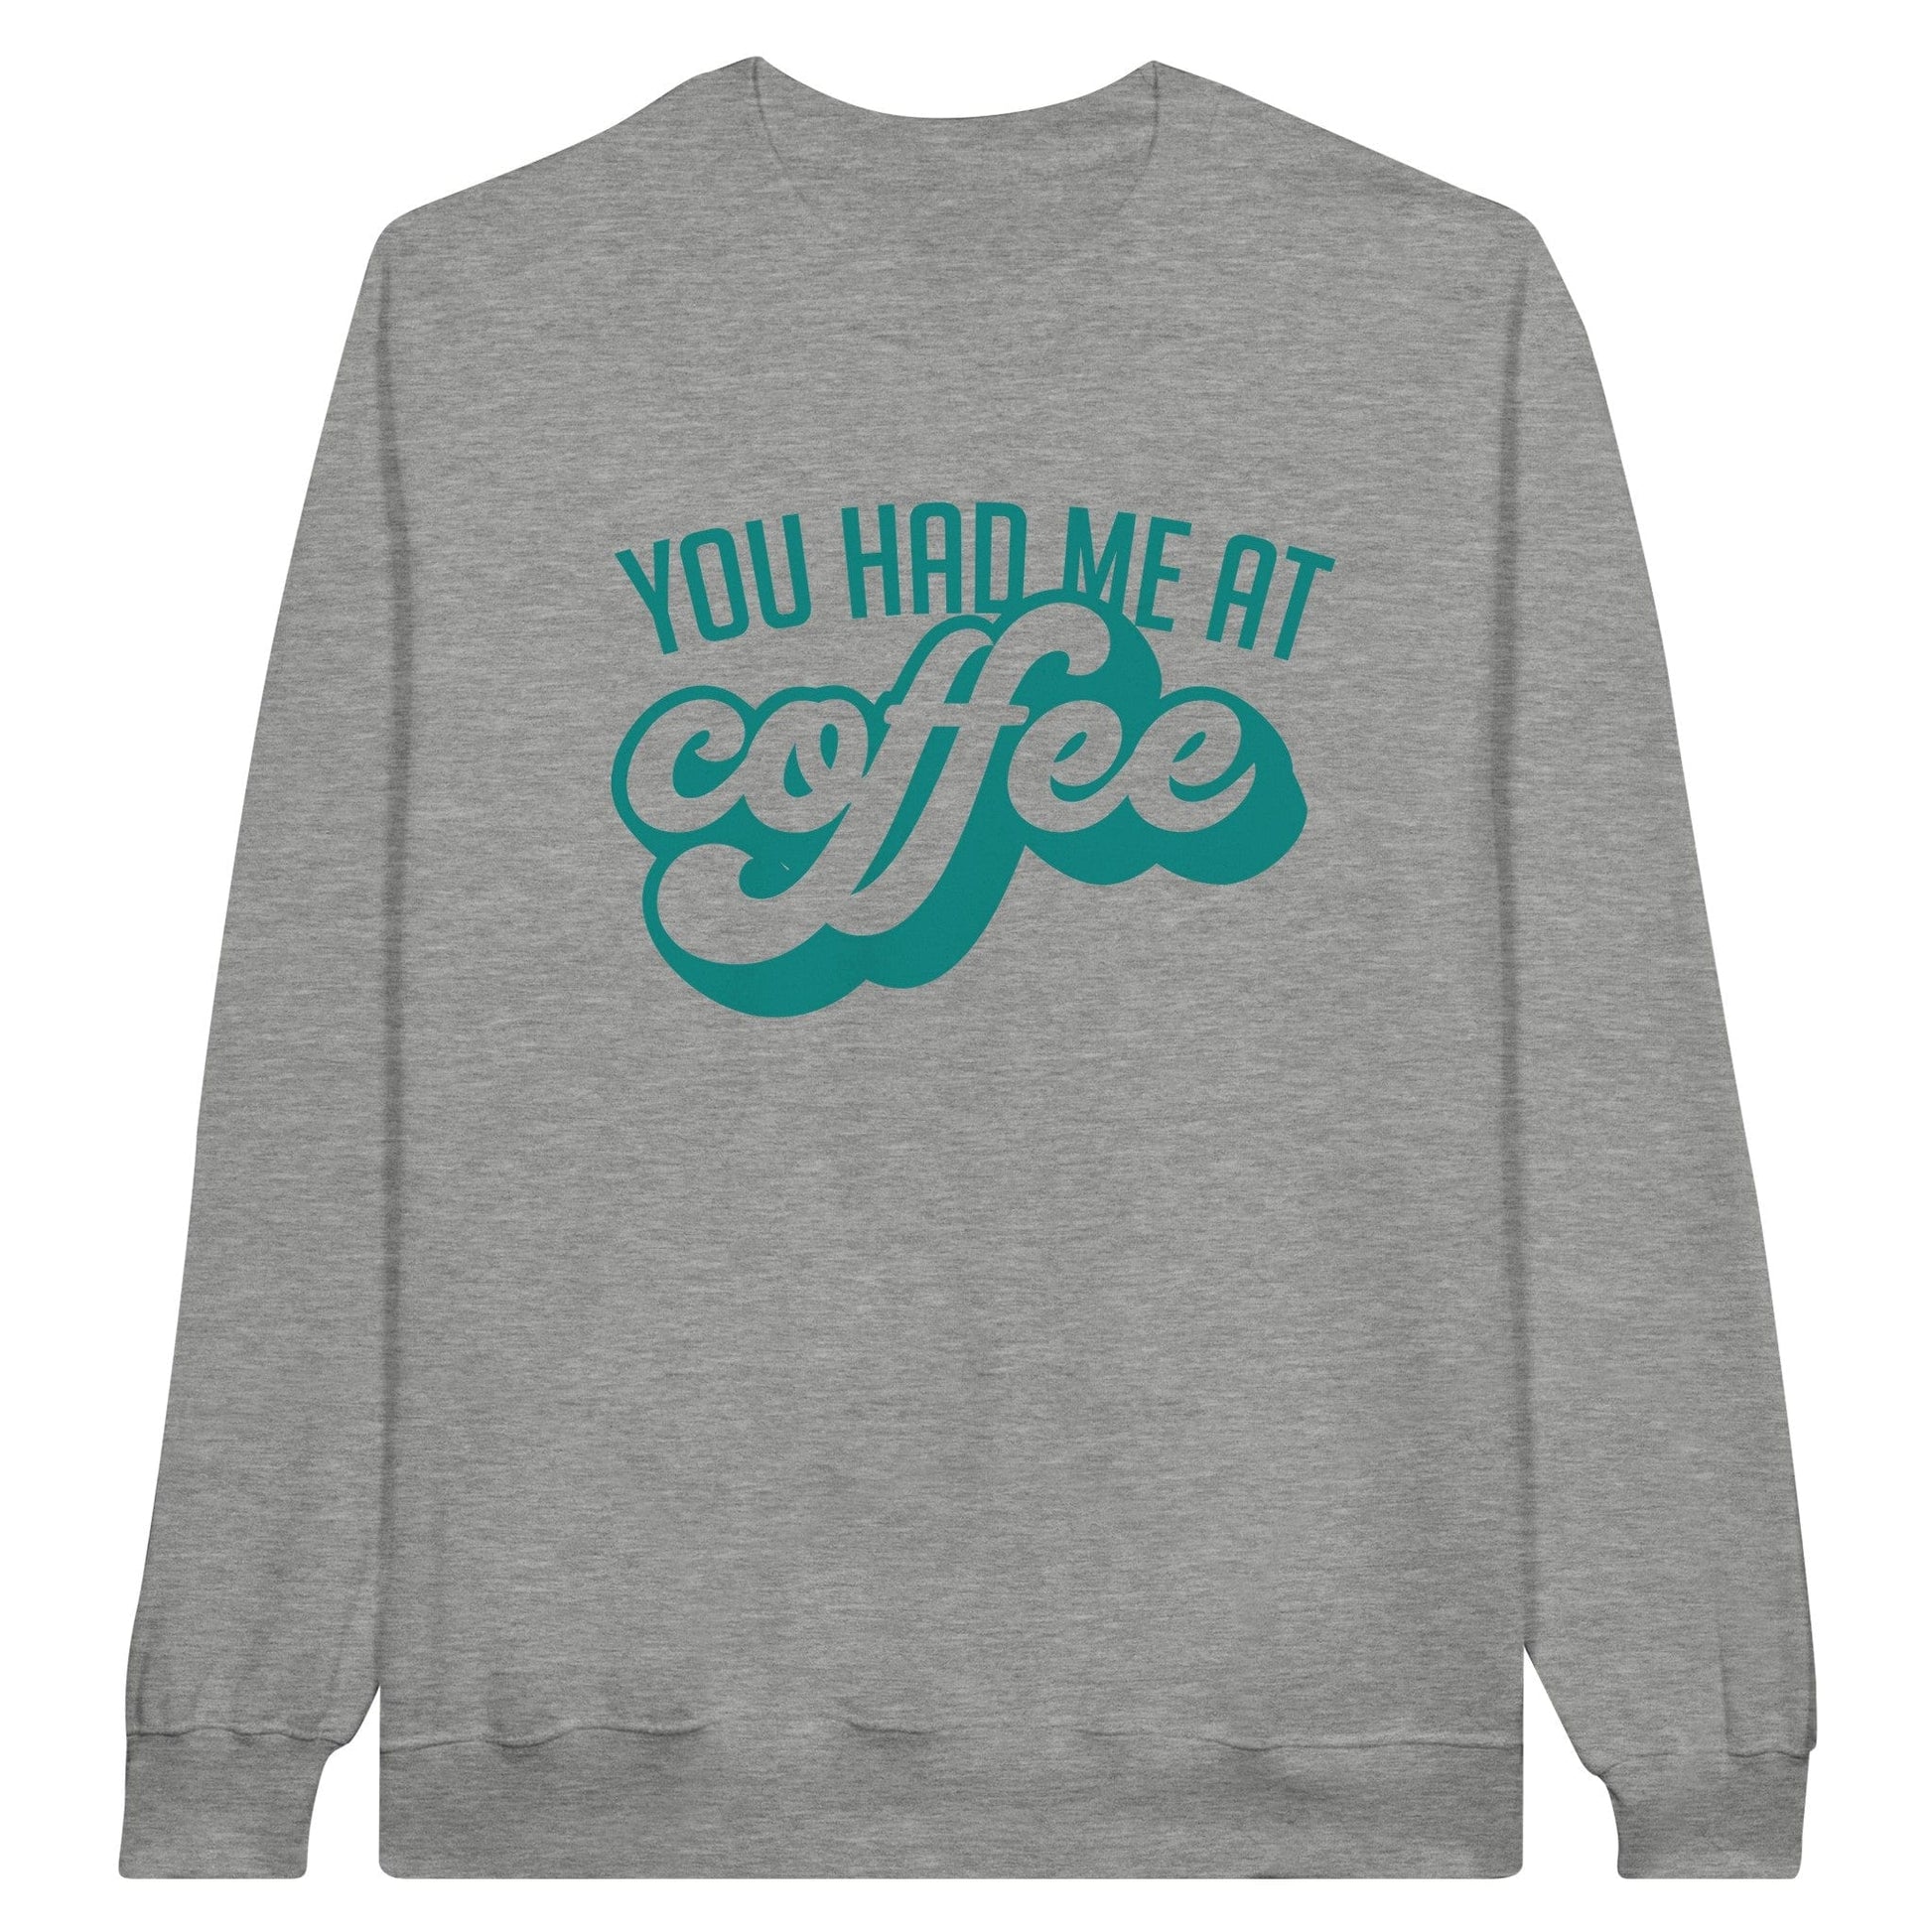 Good Bean Gifts "You Had Me at Coffee" - Classic Unisex Crewneck Sweatshirt Ash / S